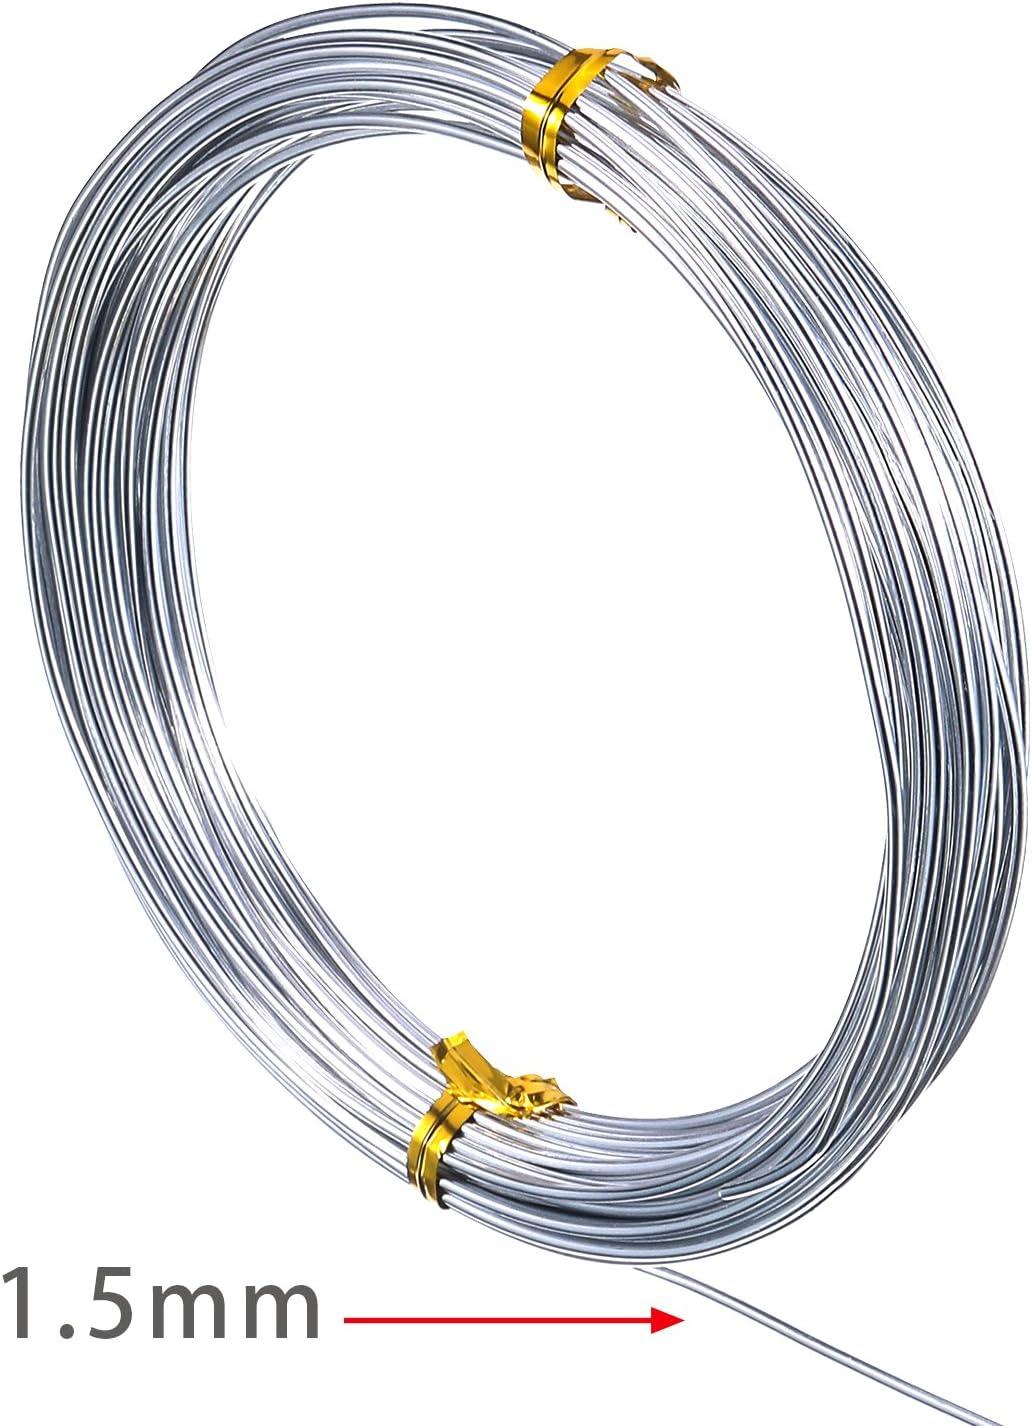 Soft Flex Craft Wire, 22 Gauge (.65 mm), Silver Plated, Non-tarnish Silver,  10 yd (9.14 m), 1 spool